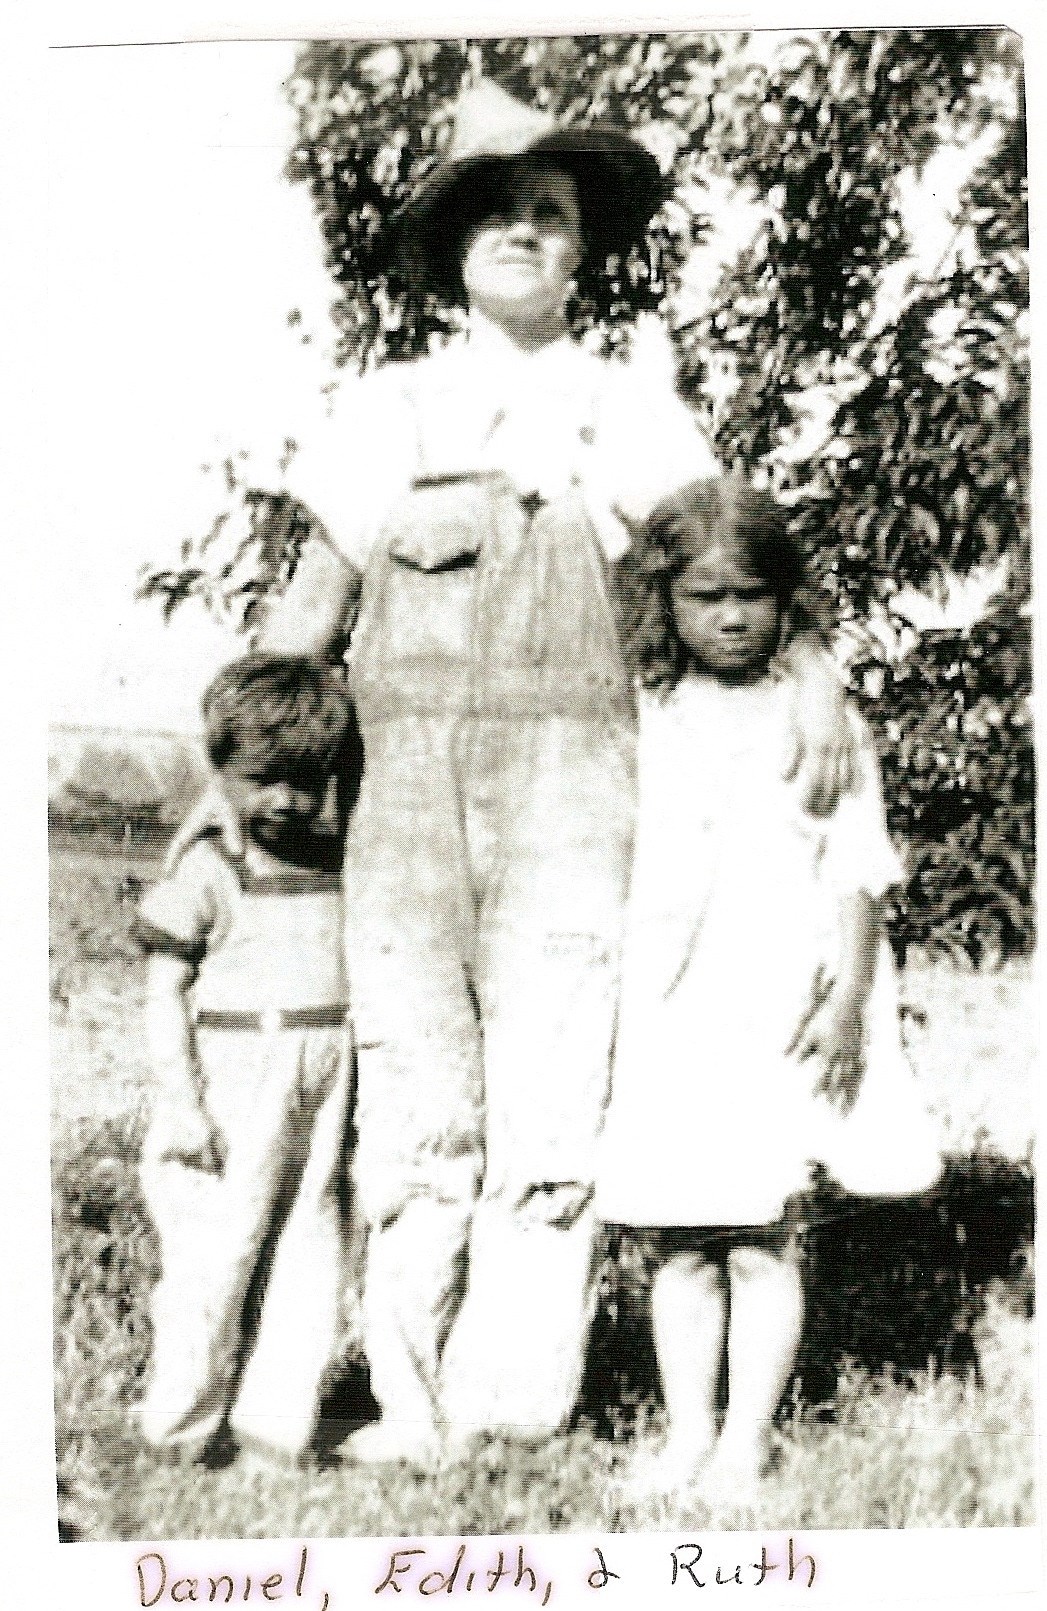 Daniel, Edith and Ruth Hale